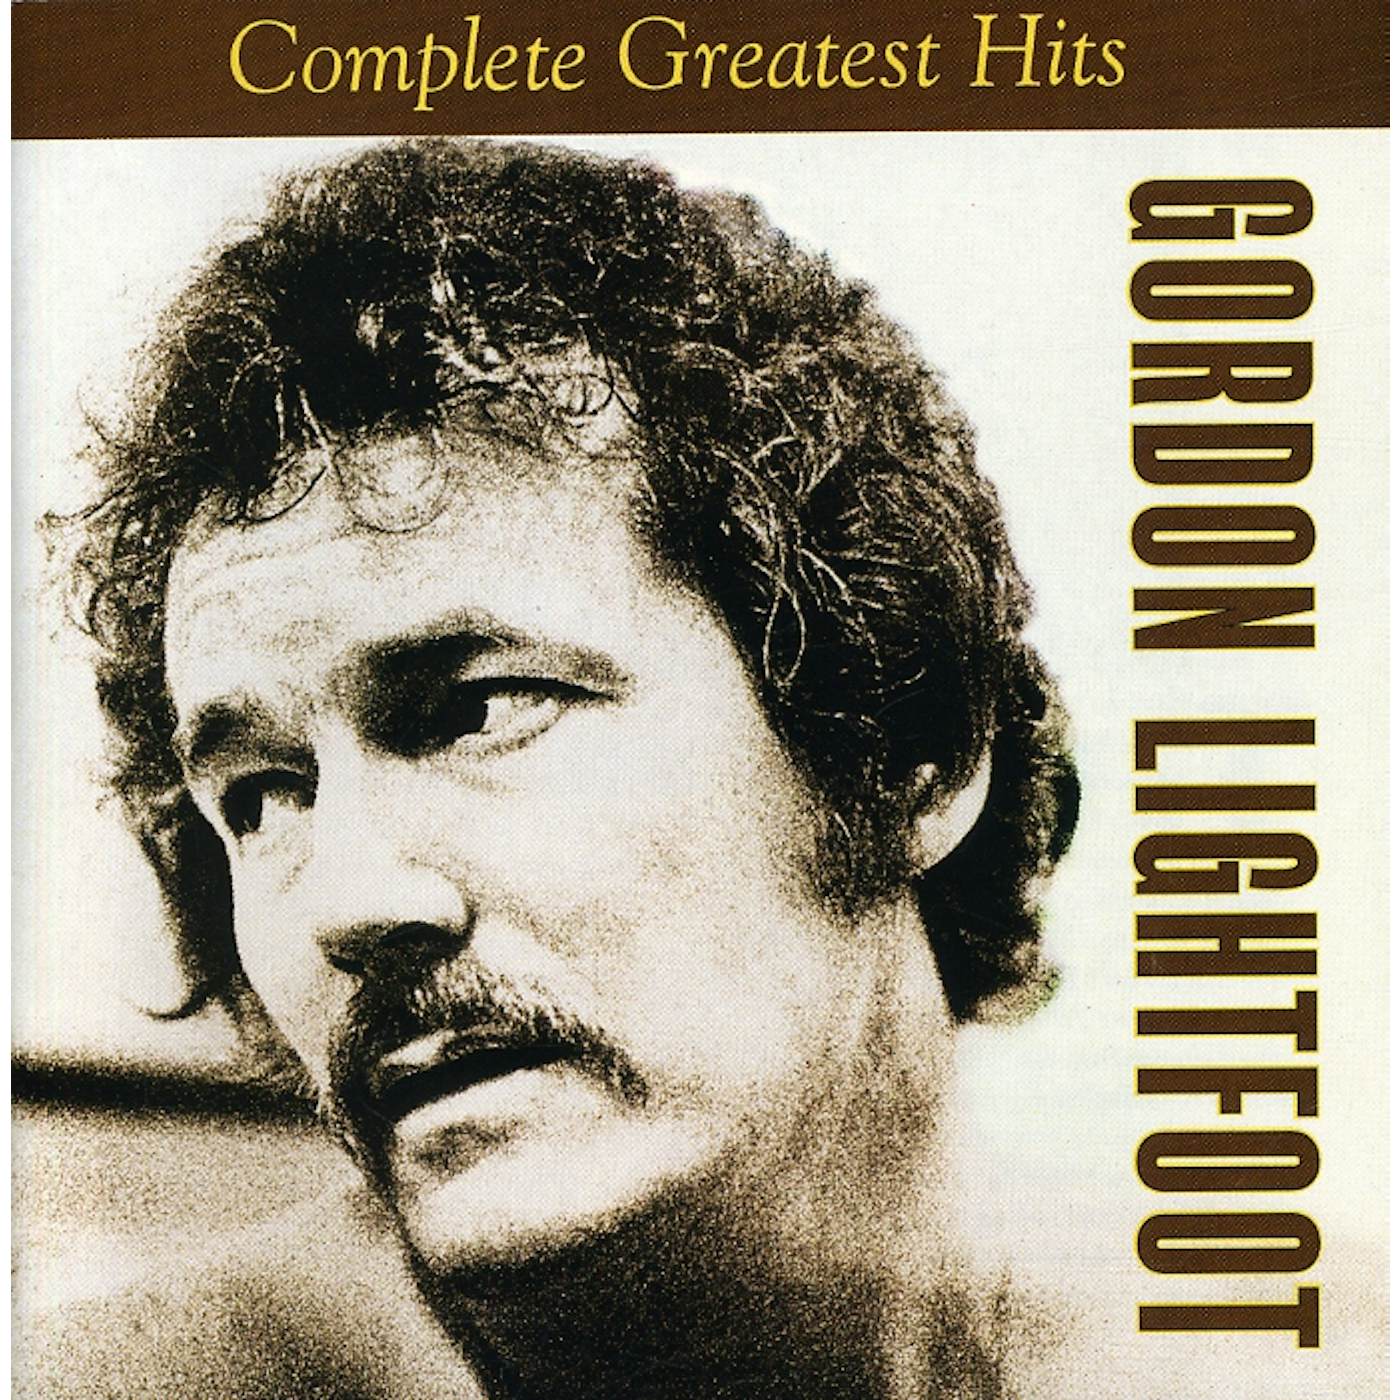 Gordon Lightfoot COMPLETE GREATEST HITS CD